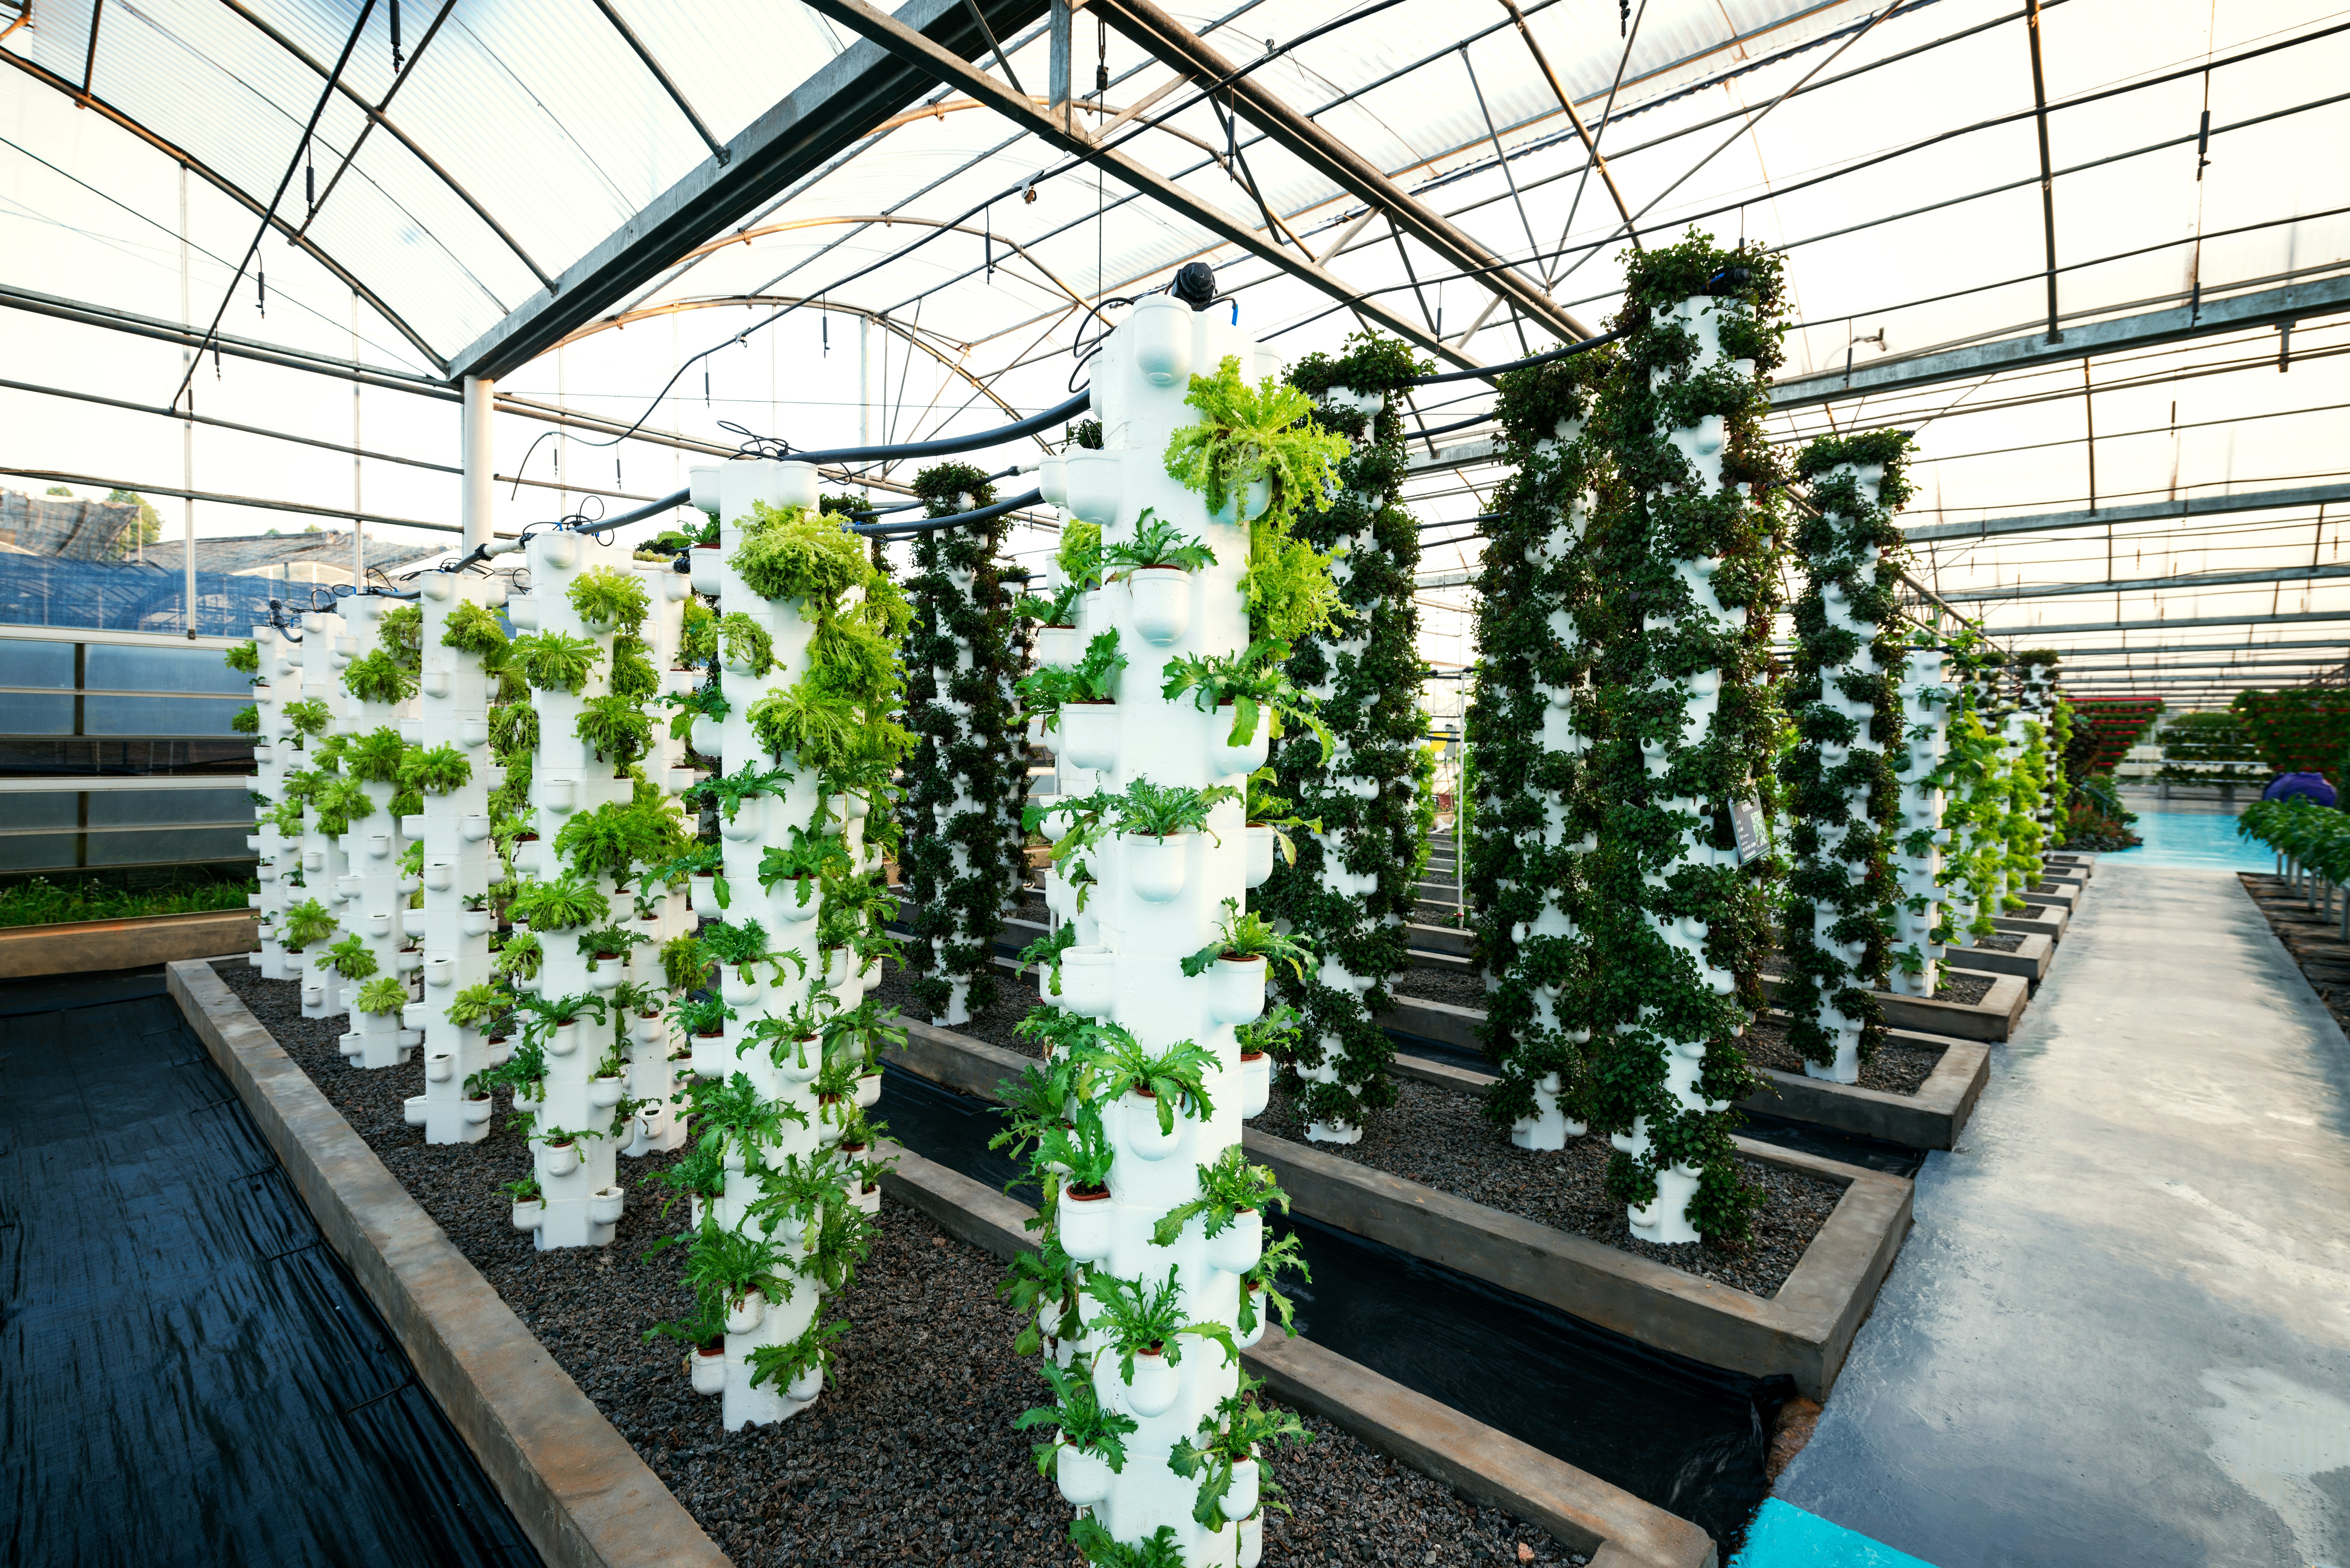 Vertical hydroponic gardening